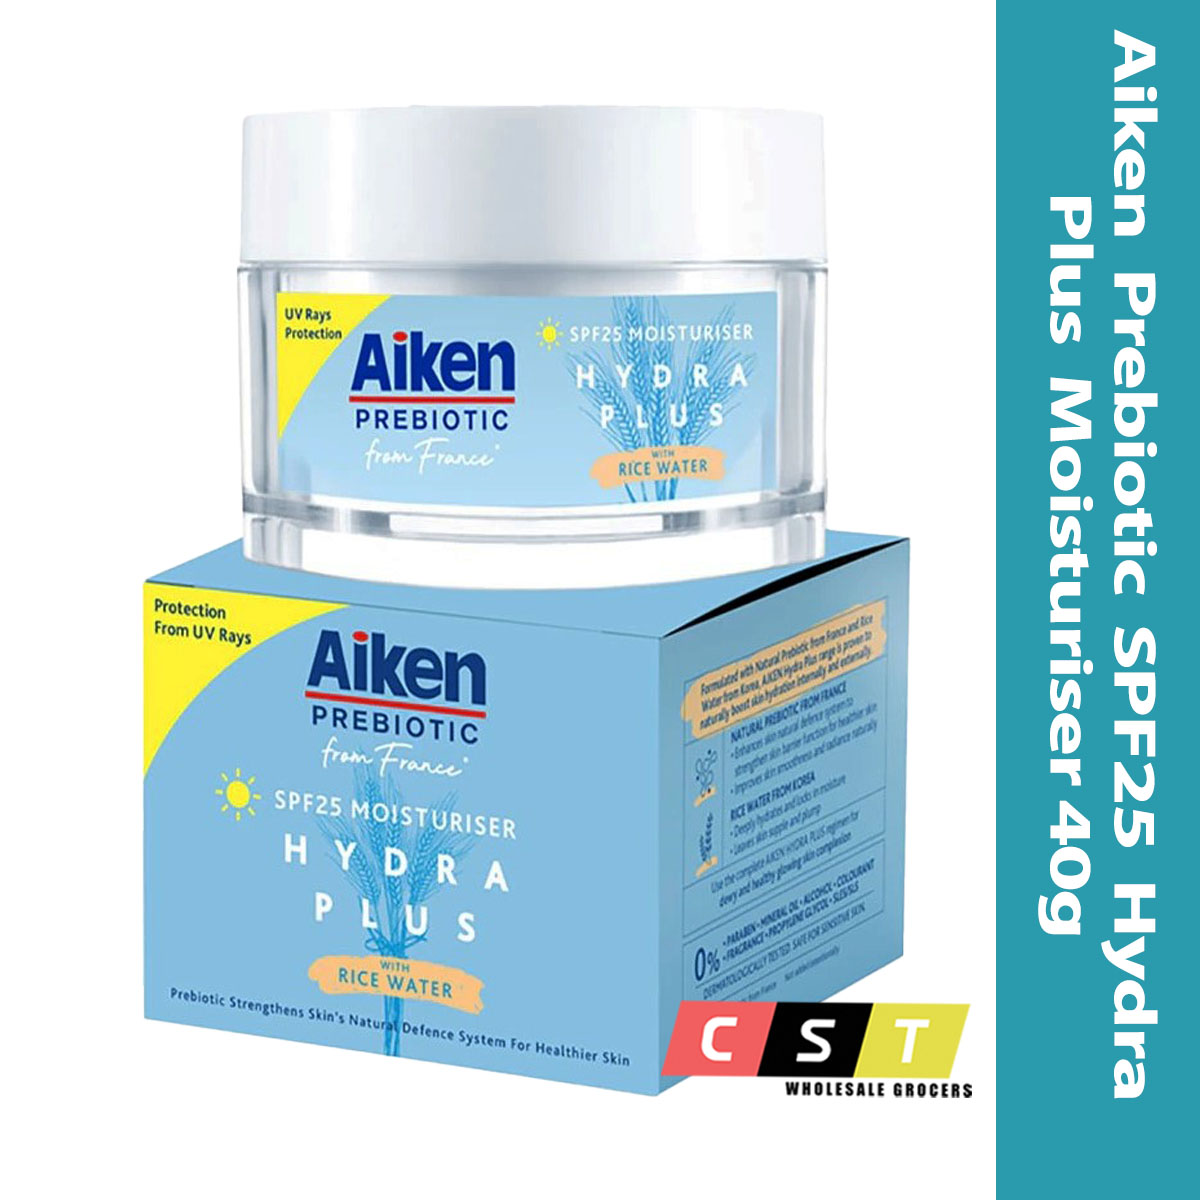 Aiken hydra plus moisturizer